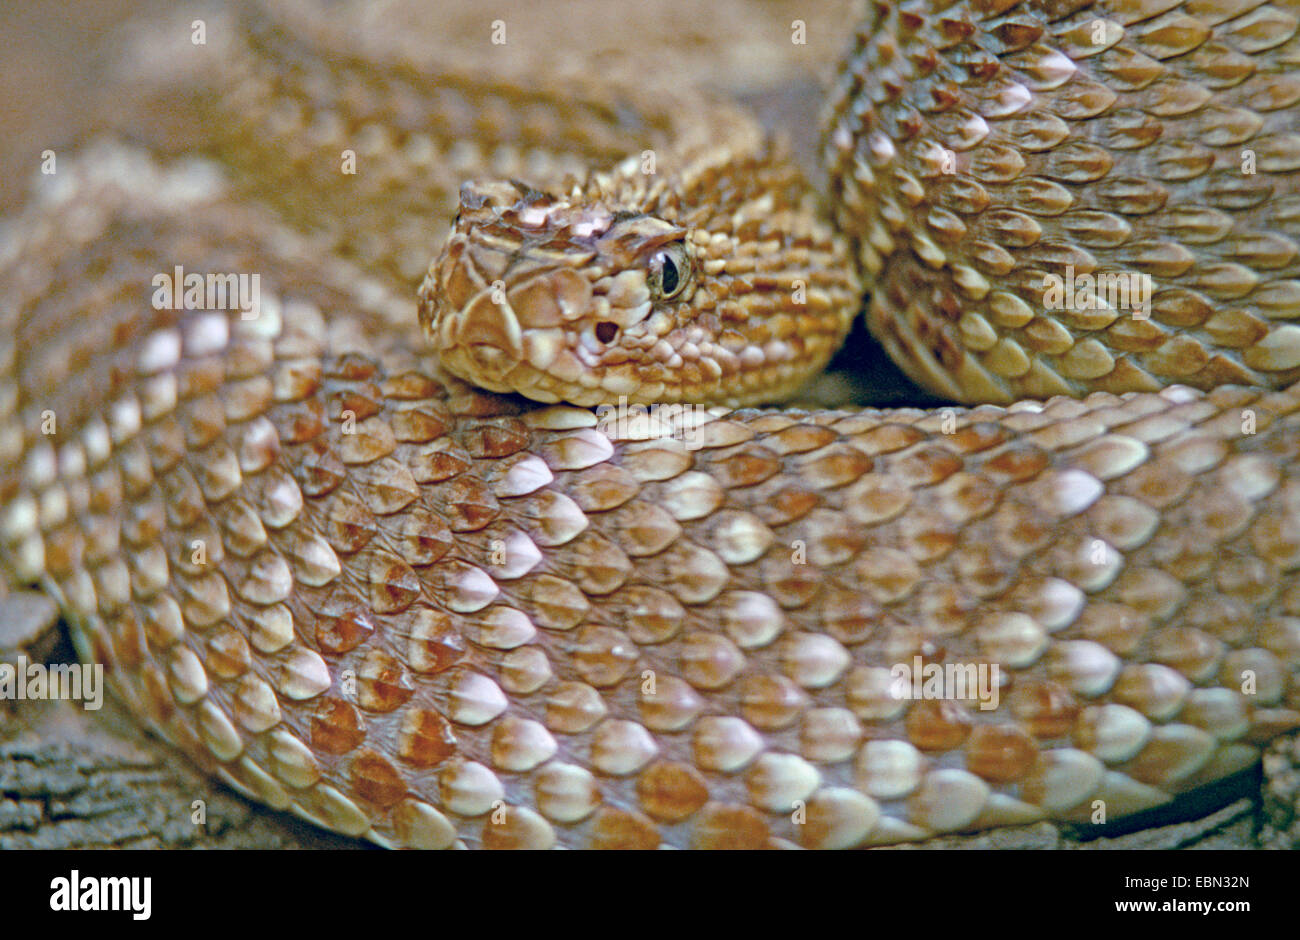 neotropical rattlesnake, cascabel (Crotalus durissus durissus, Crotalus terrificus), portrait Stock Photo